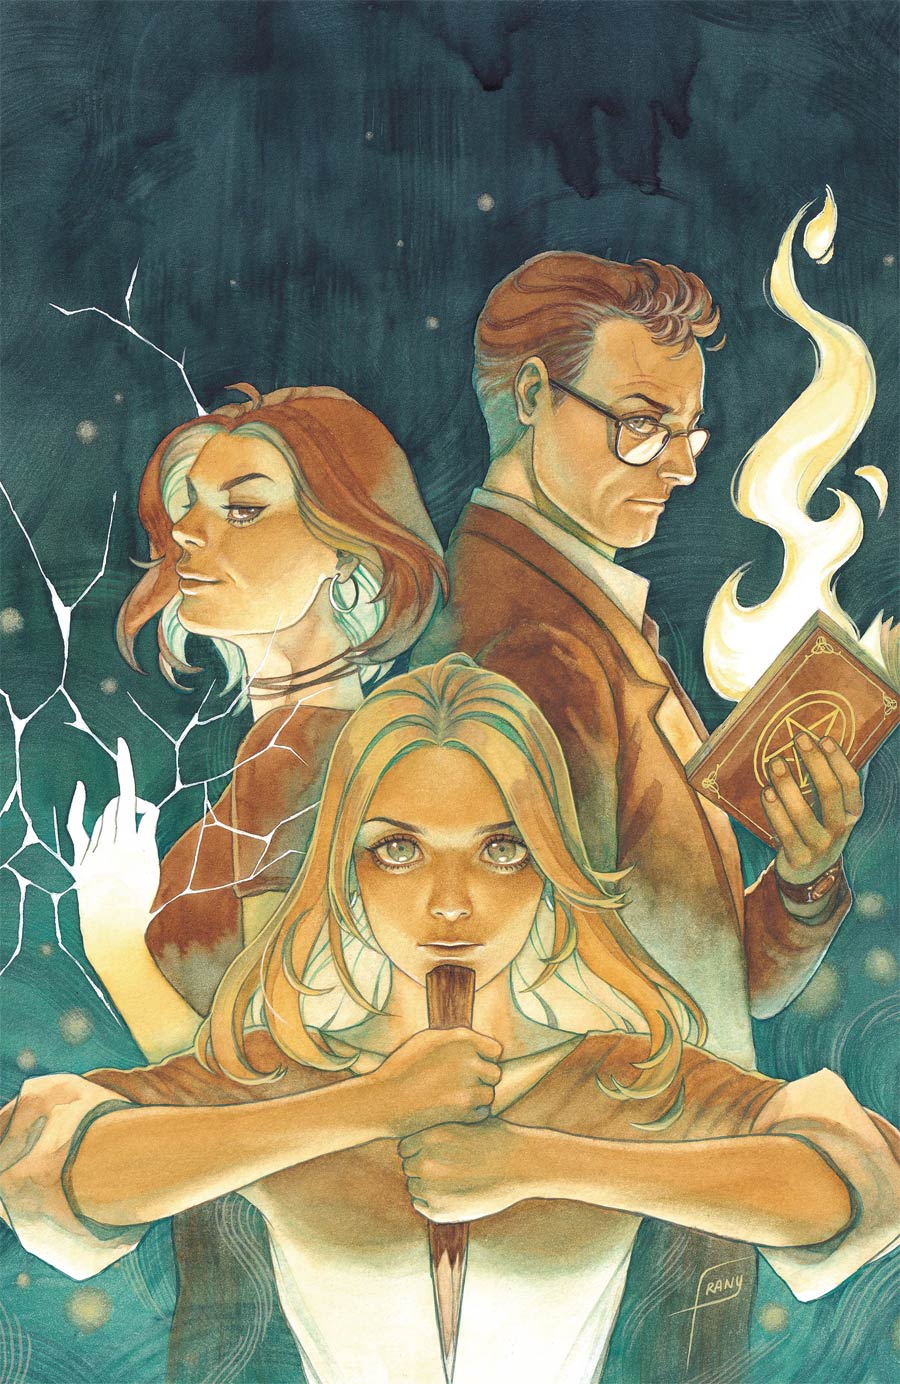 Buffy The Vampire Slayer Vol 2 #30 Cover C Incentive Frany Virgin Cover